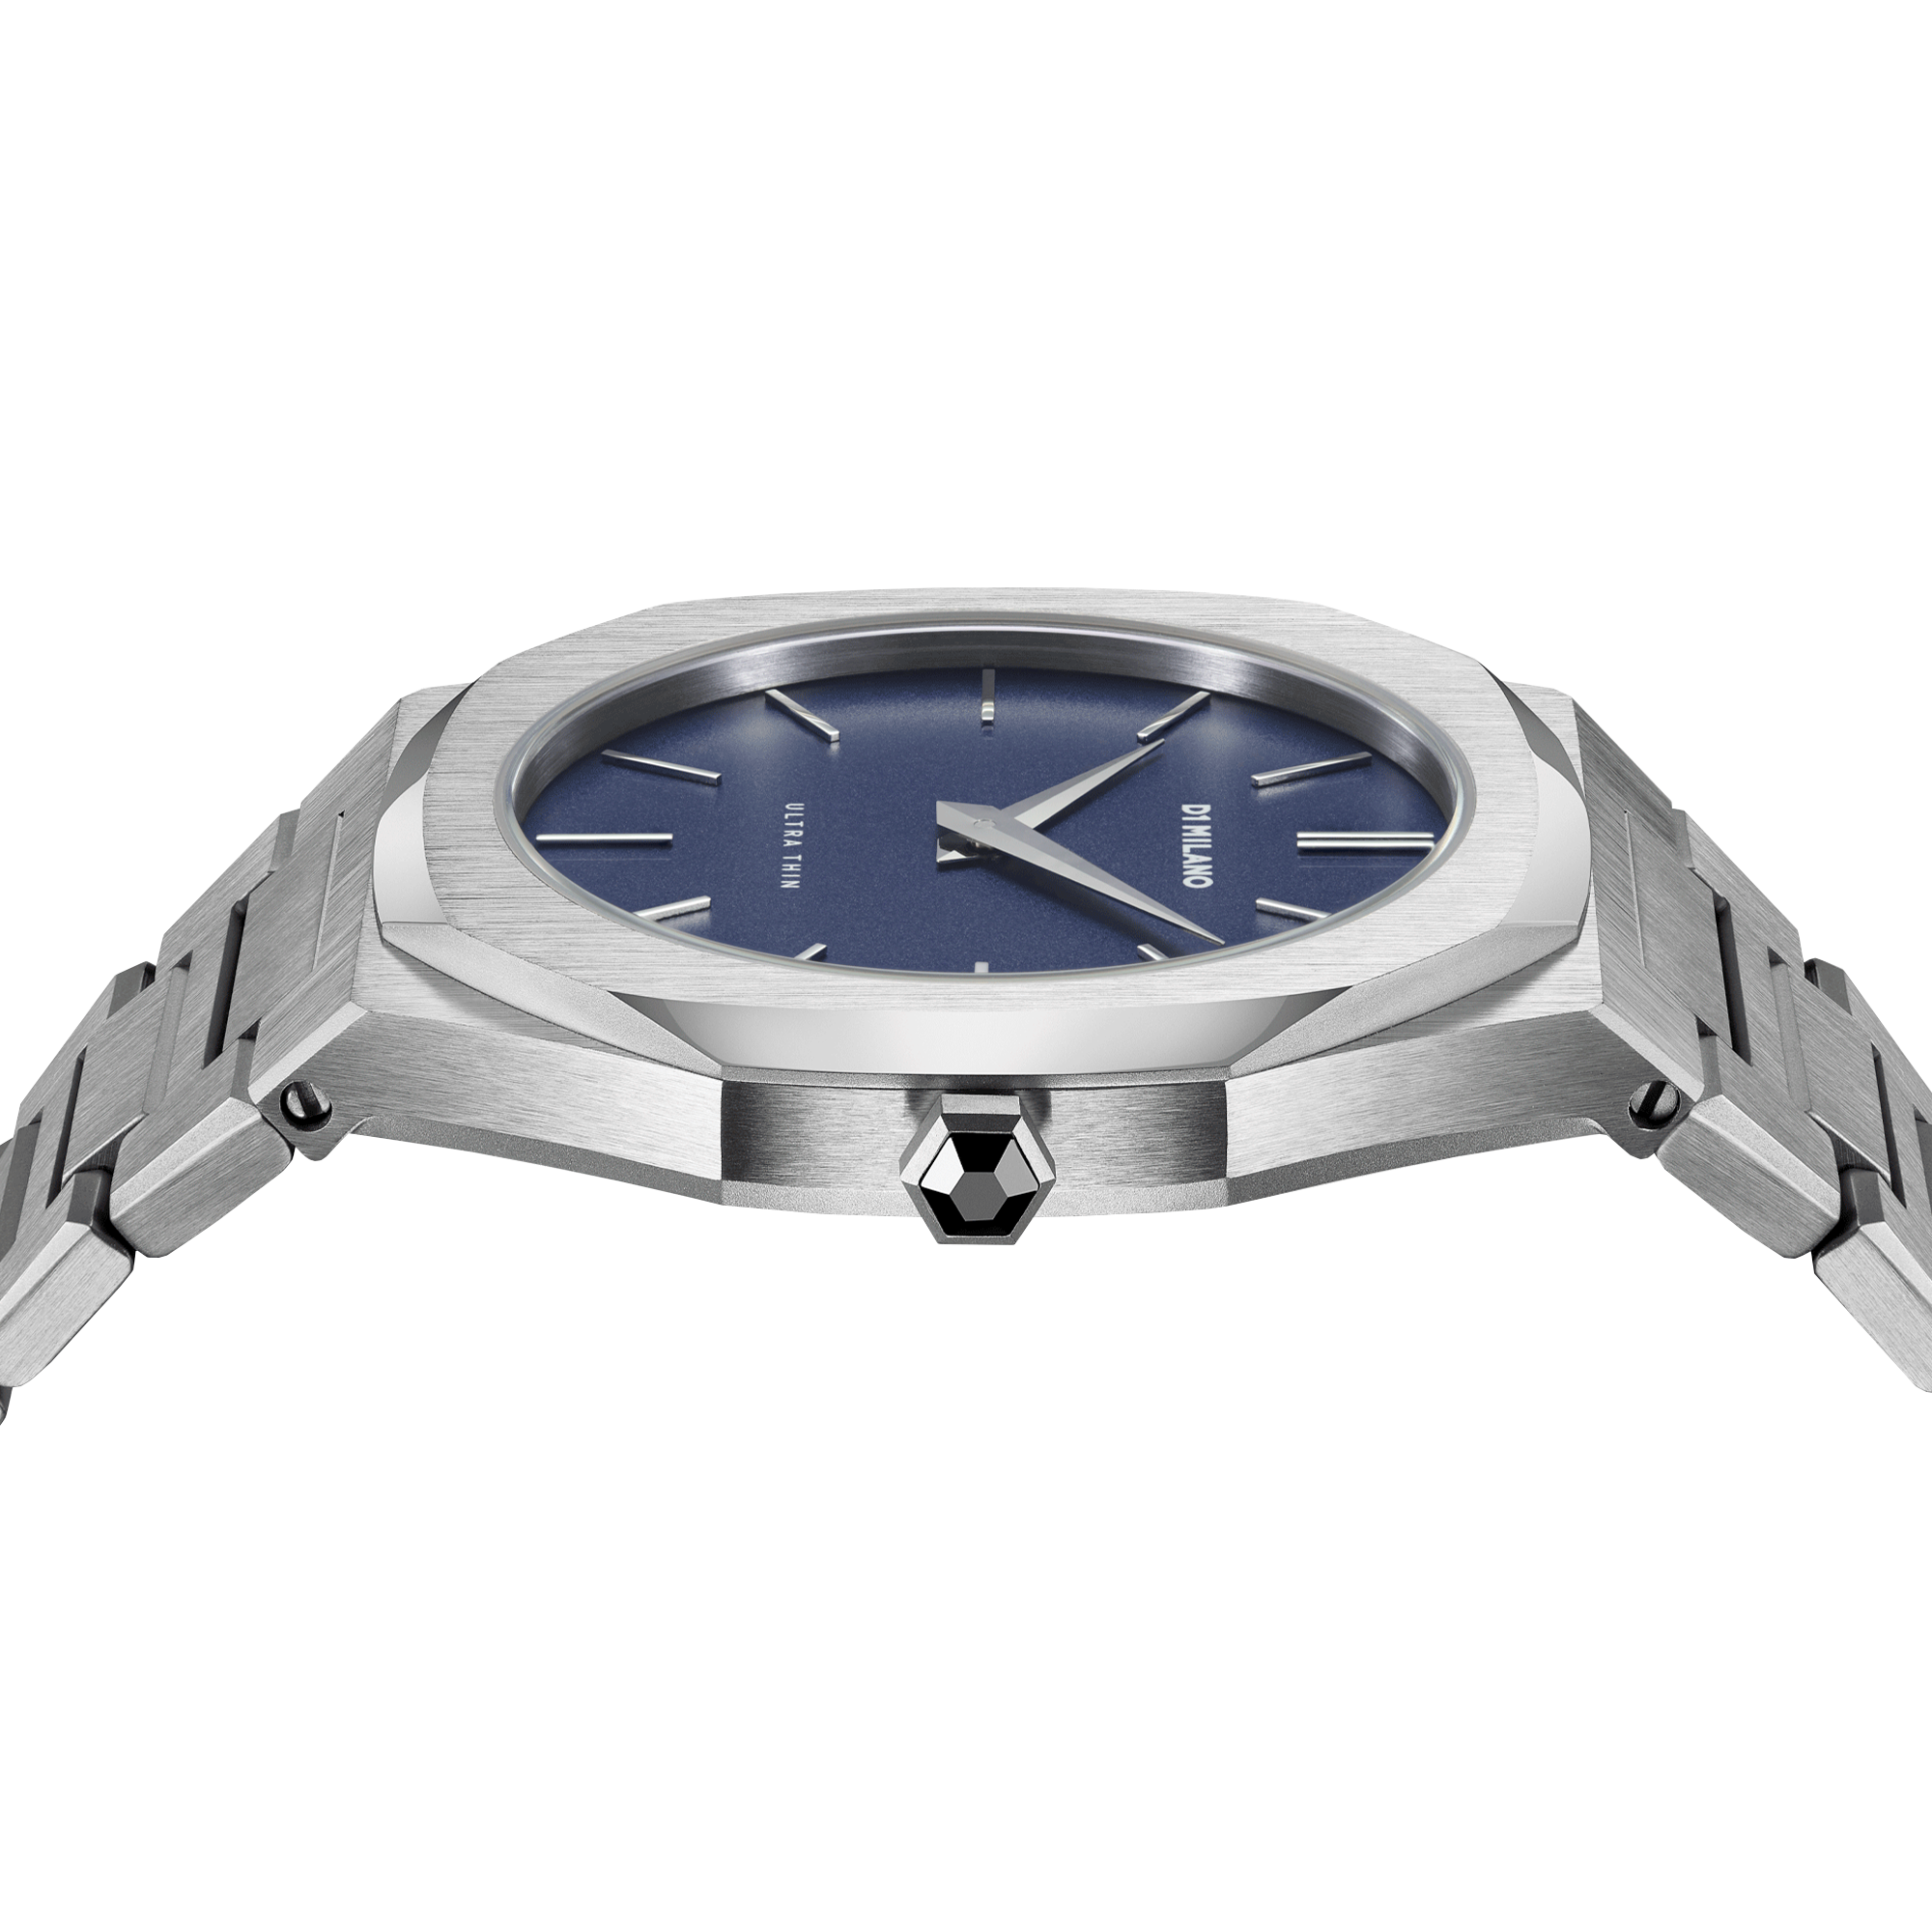 Unisex Ultra-Thin Ocean Watch Watch D1-UTBU01 D1 Milano